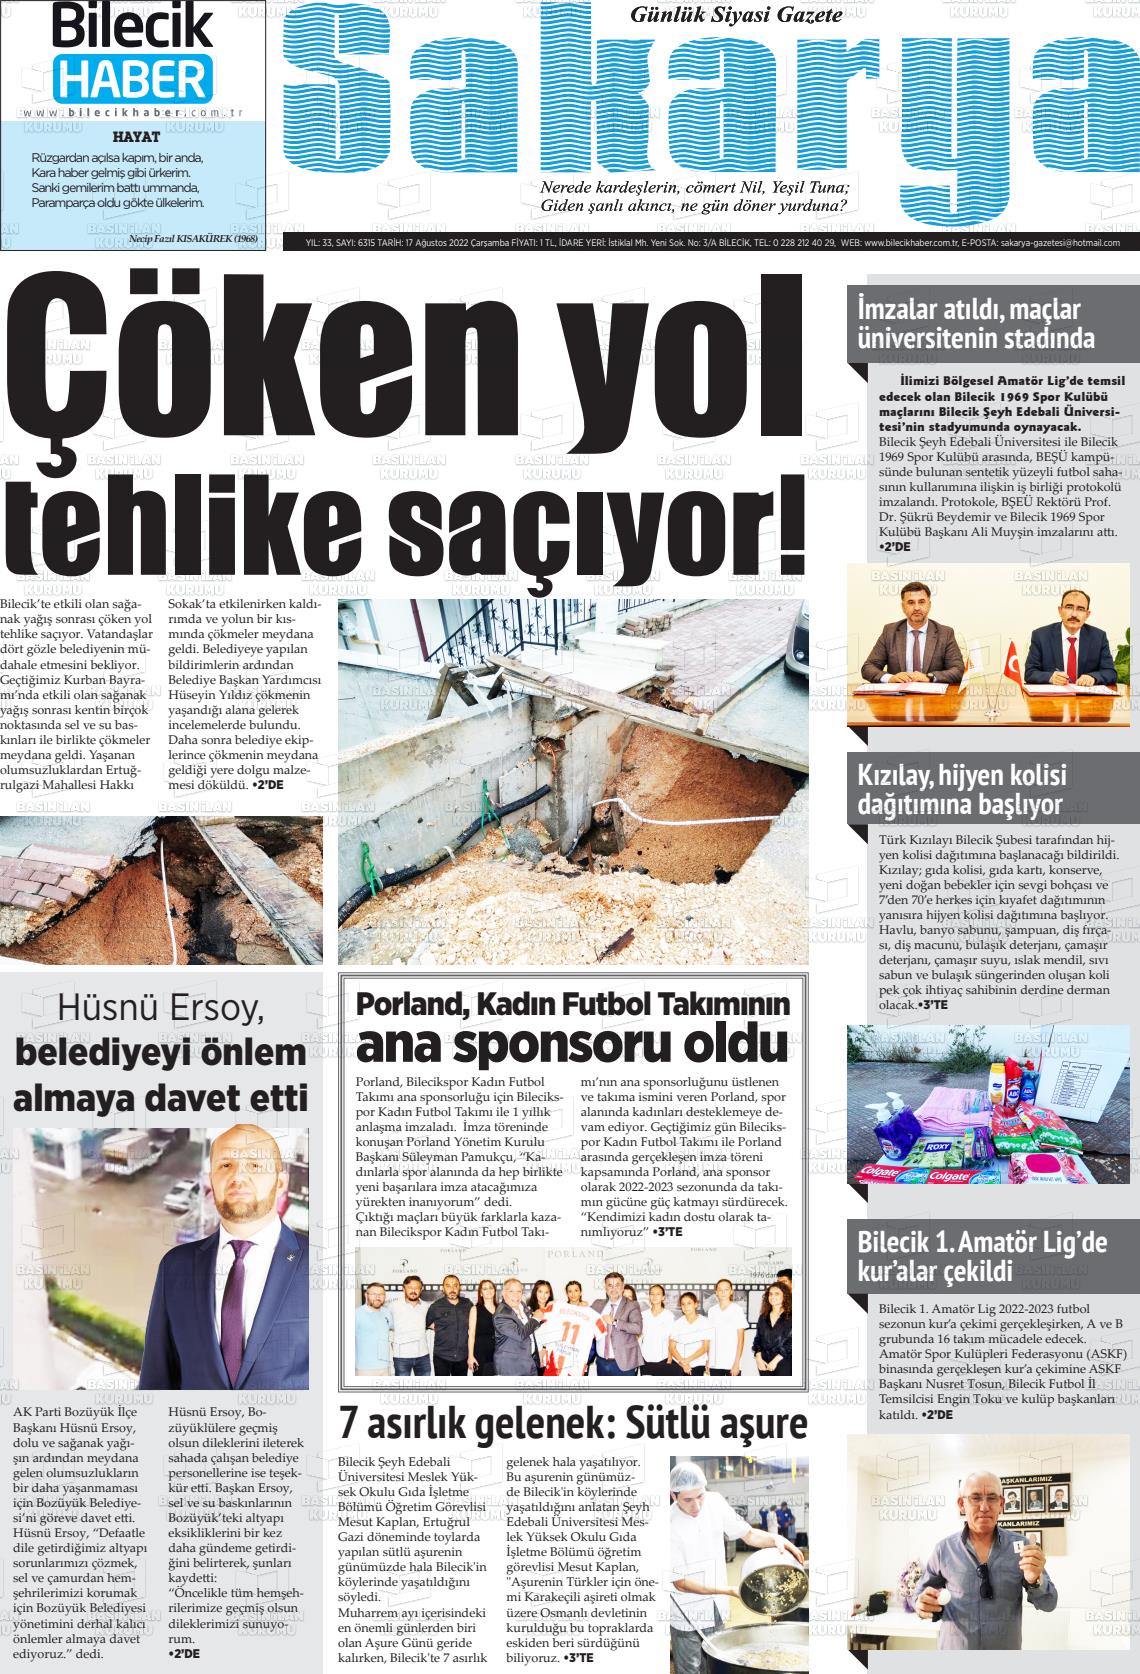 17 Ağustos 2022 Bilecik Haber Sakarya Gazete Manşeti